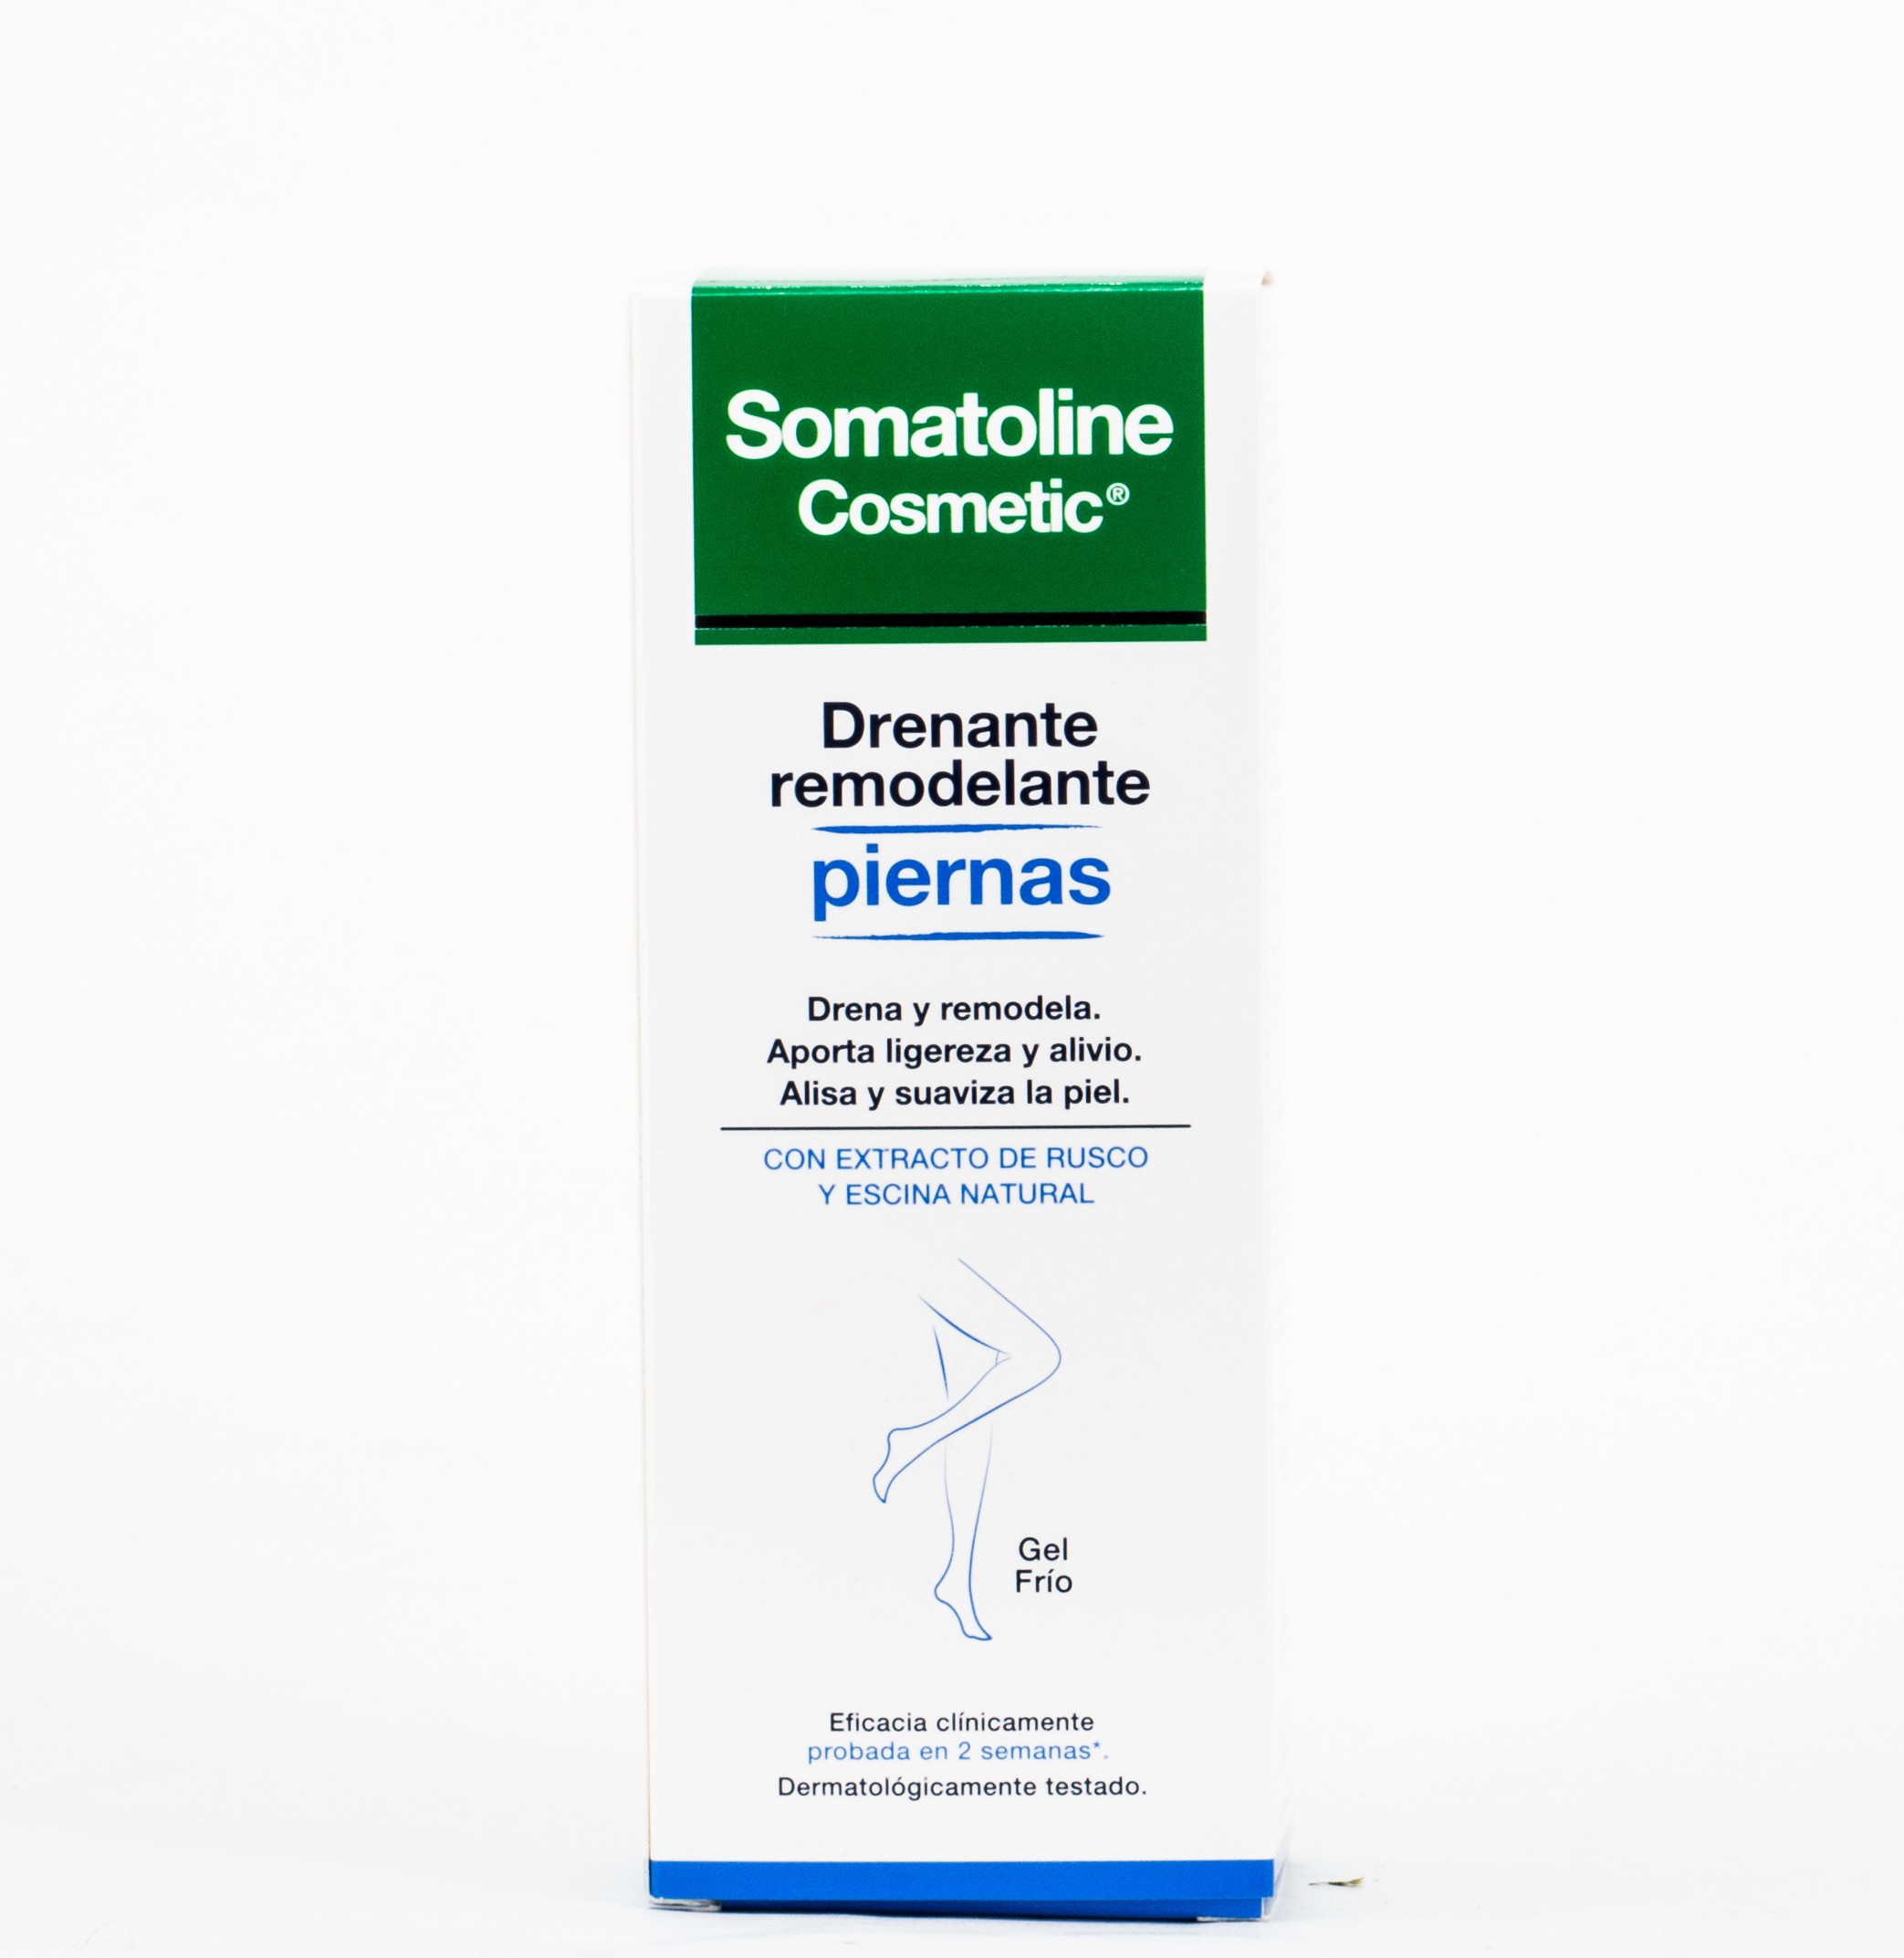 Somatoline Reductor Drenante Piernas, 200ml.